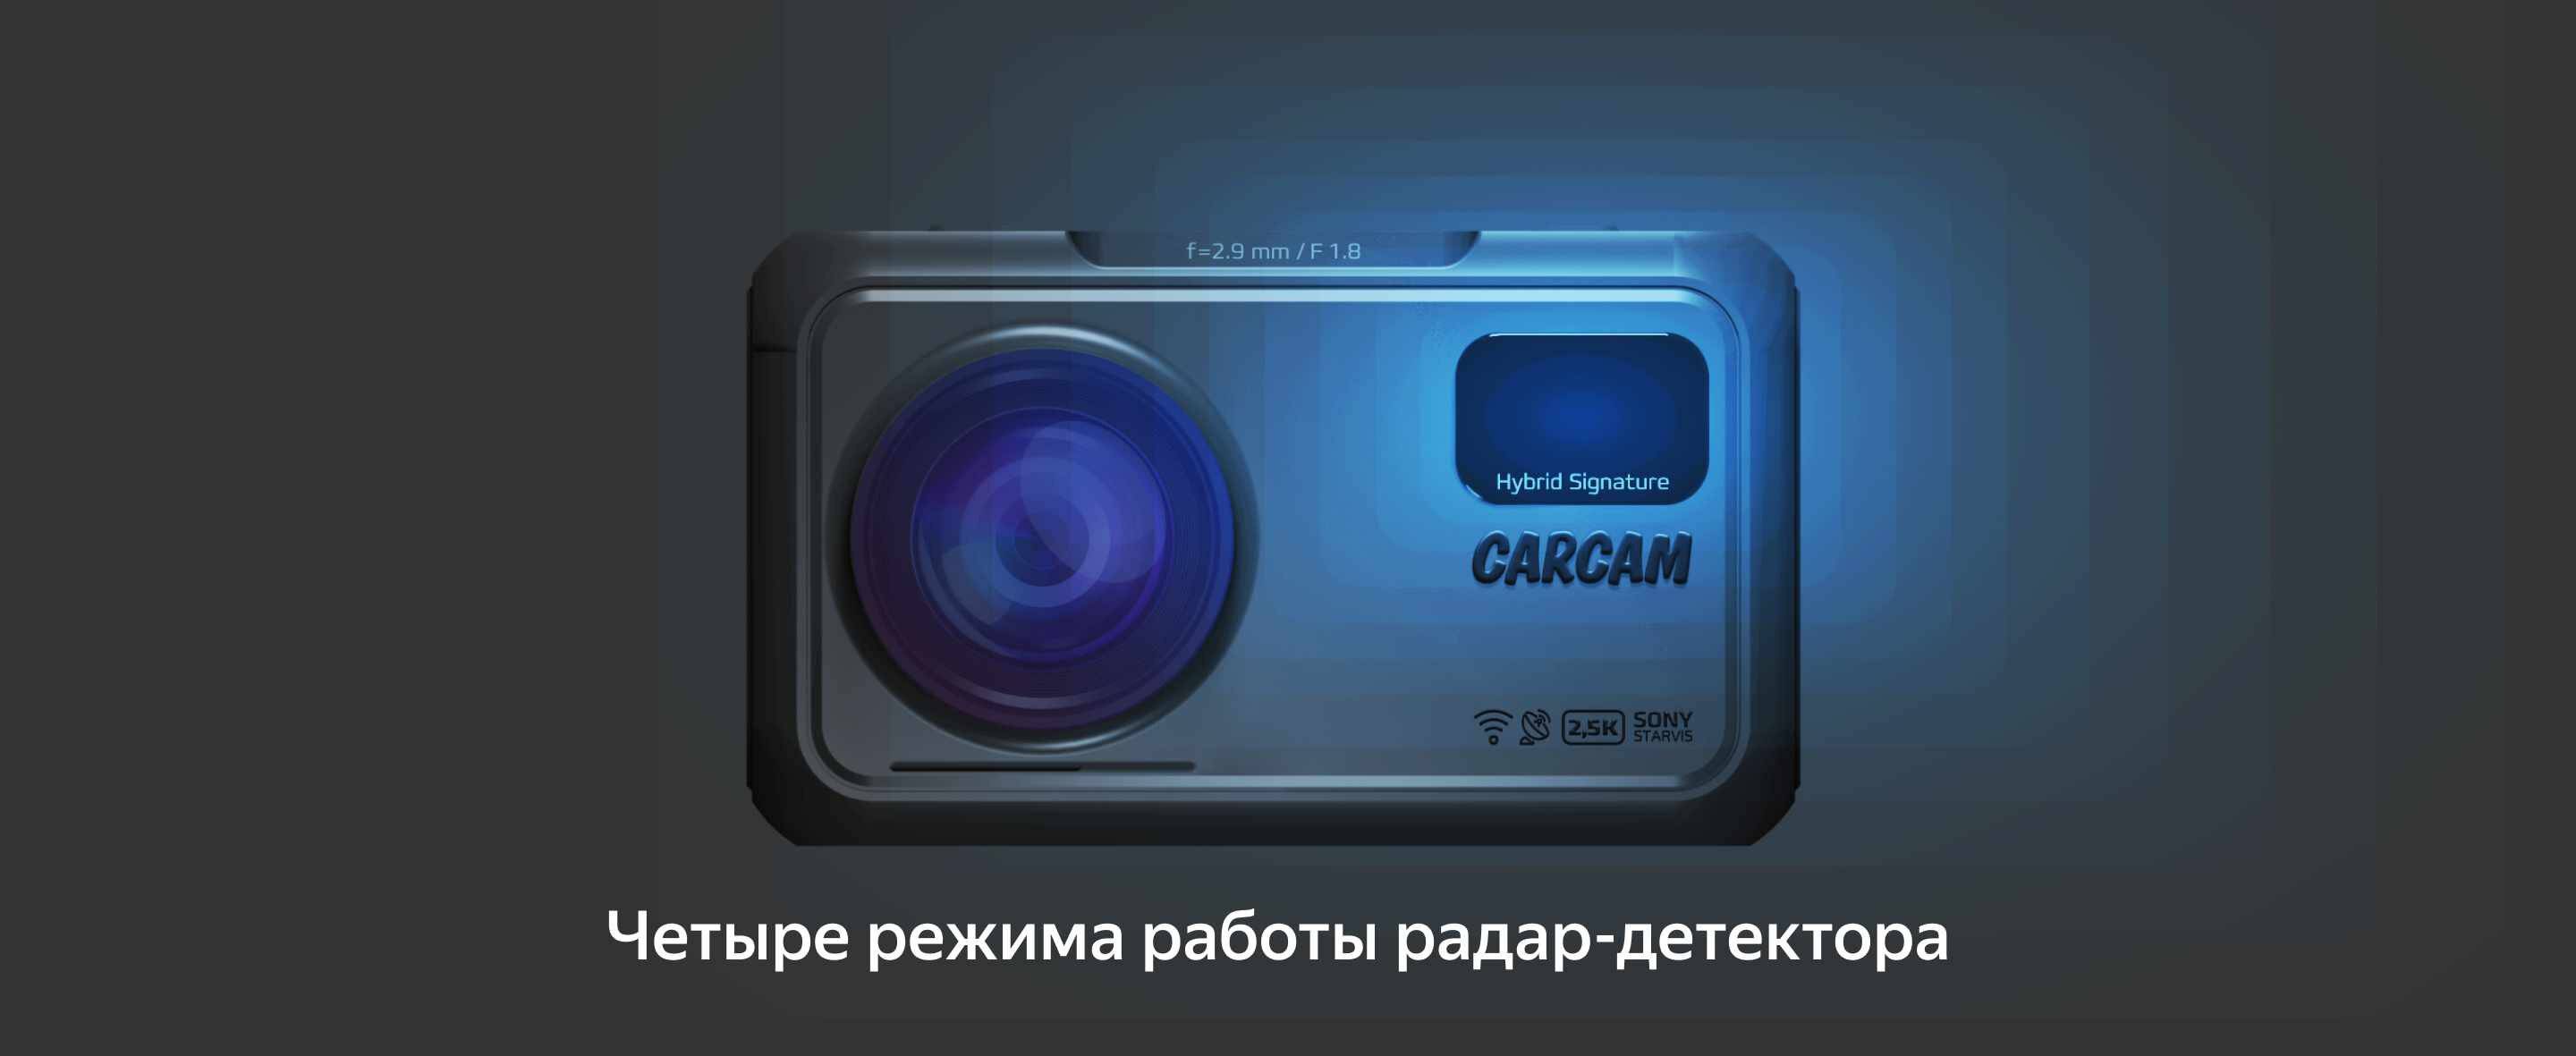 Обзор carcam hybrid 3 signature